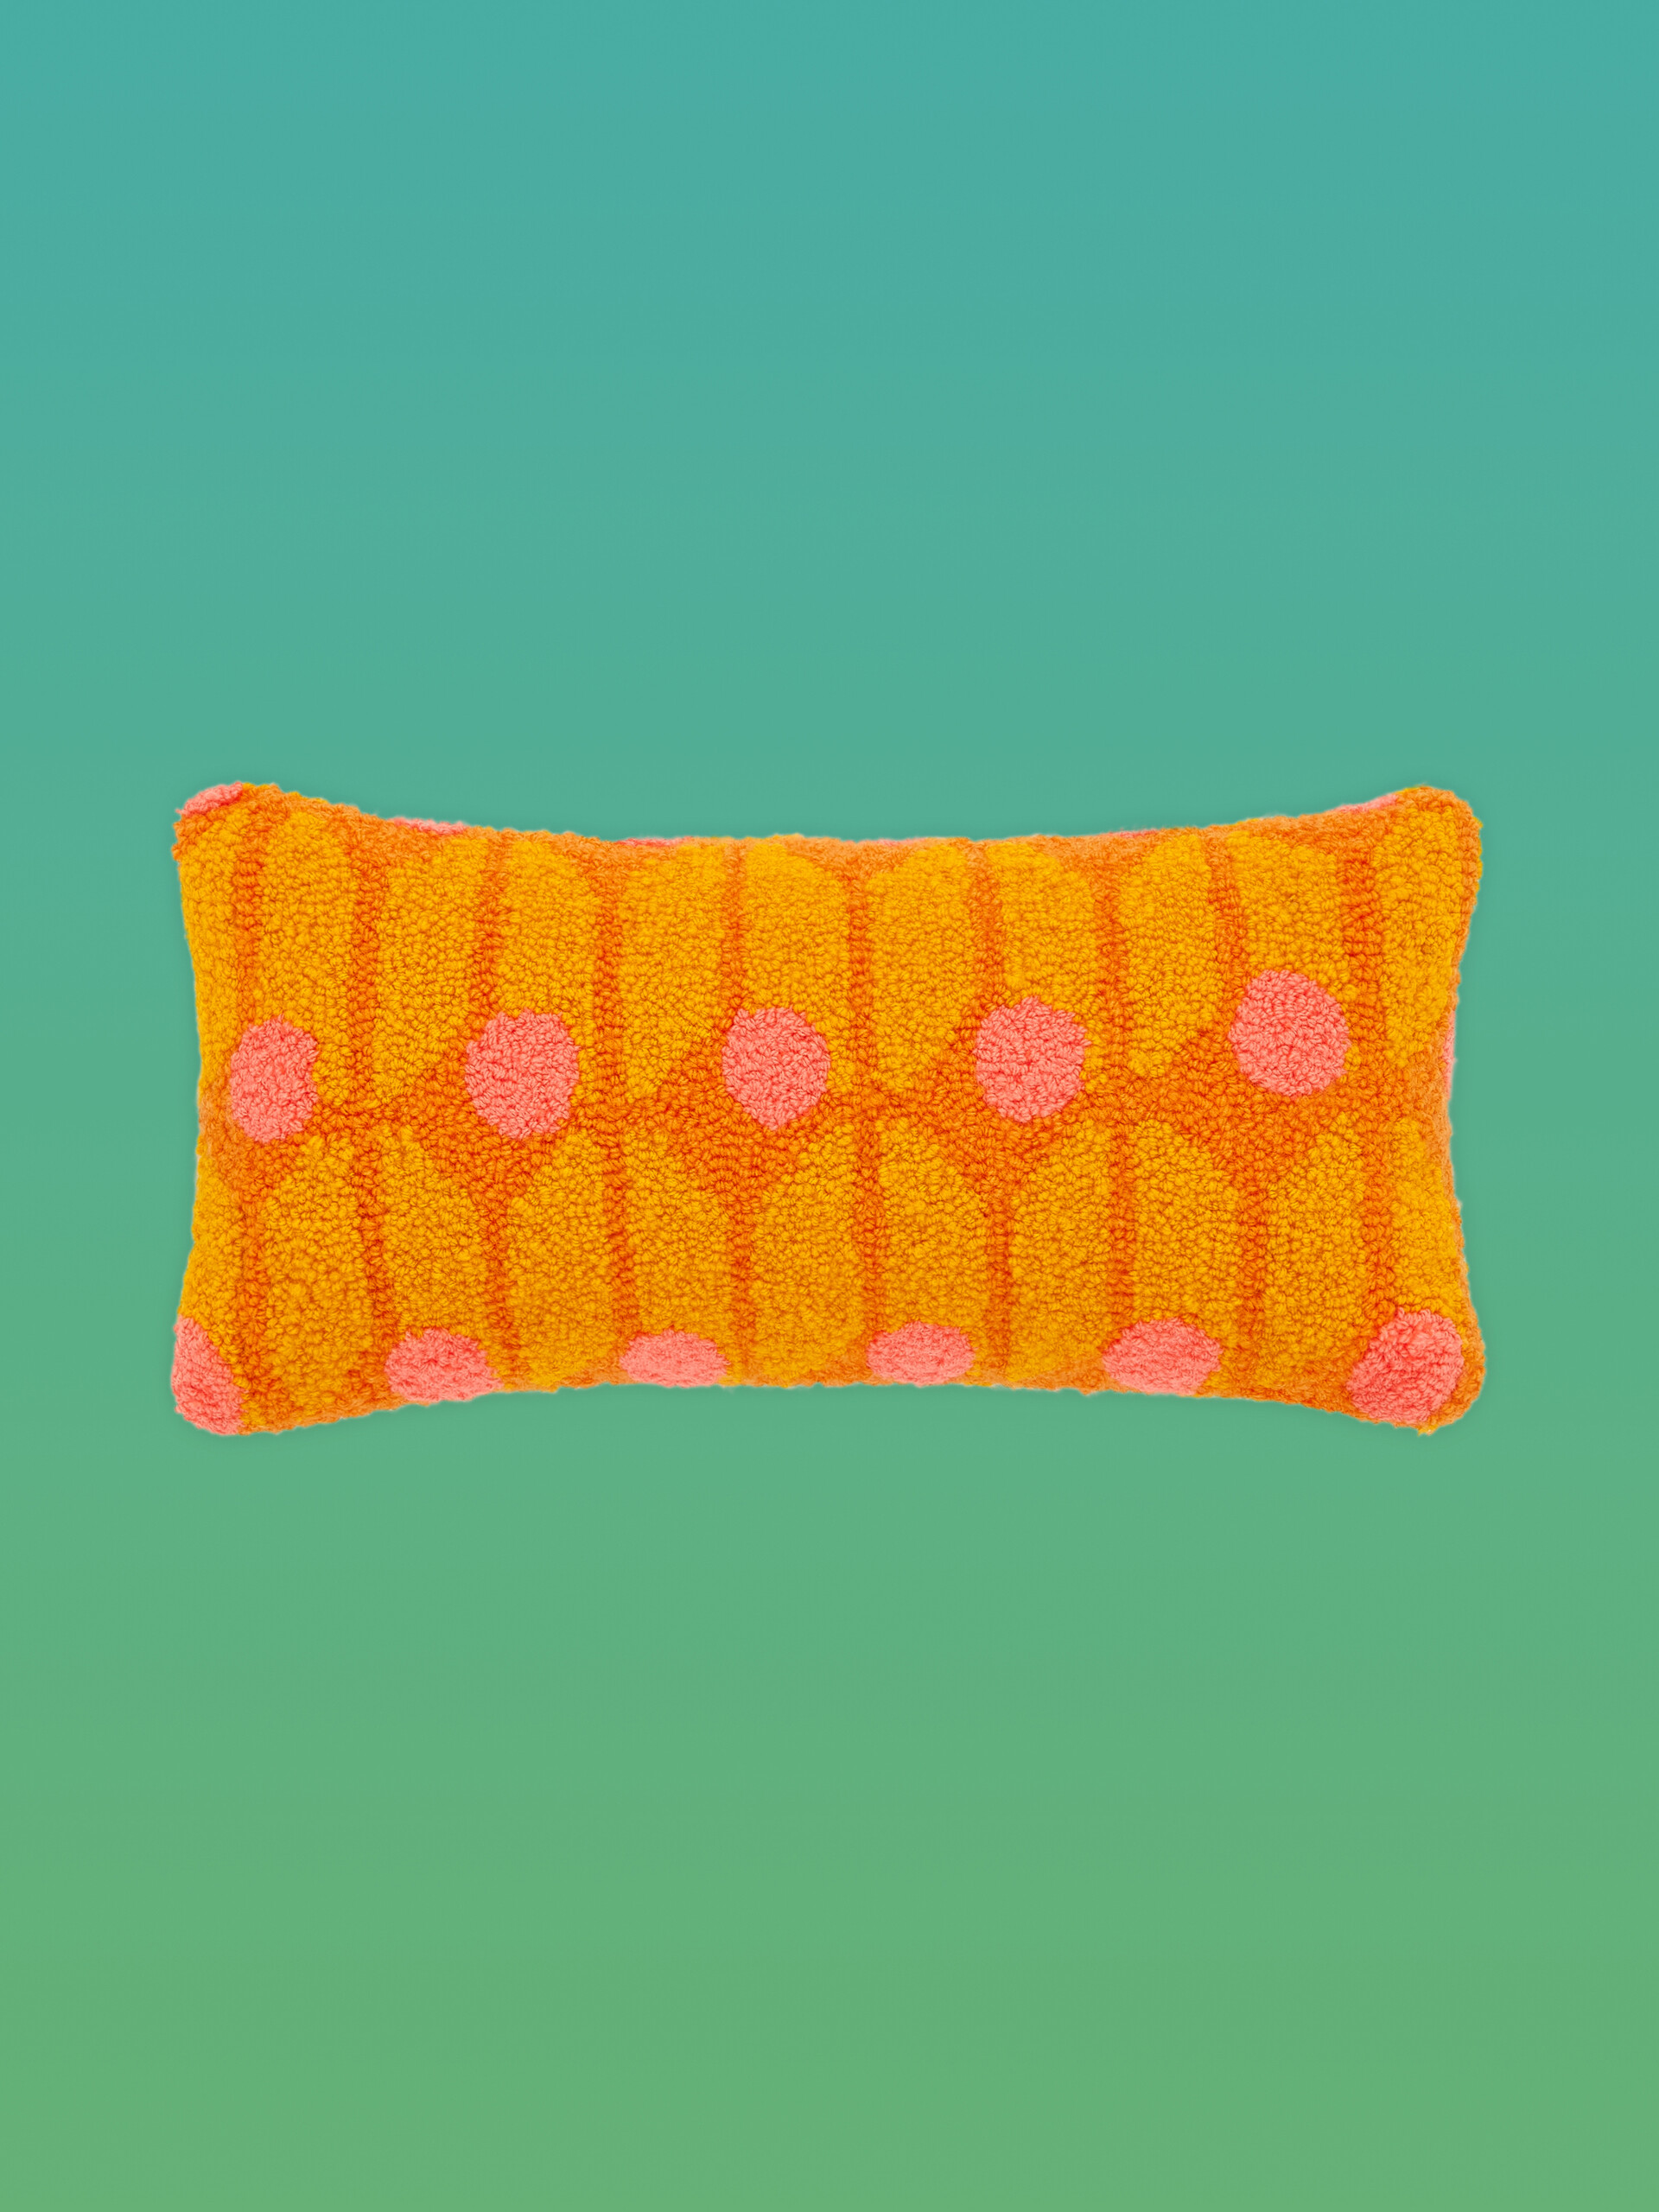 Multicolor orange fabric MARNI MARKET pillow - Furniture - Image 1